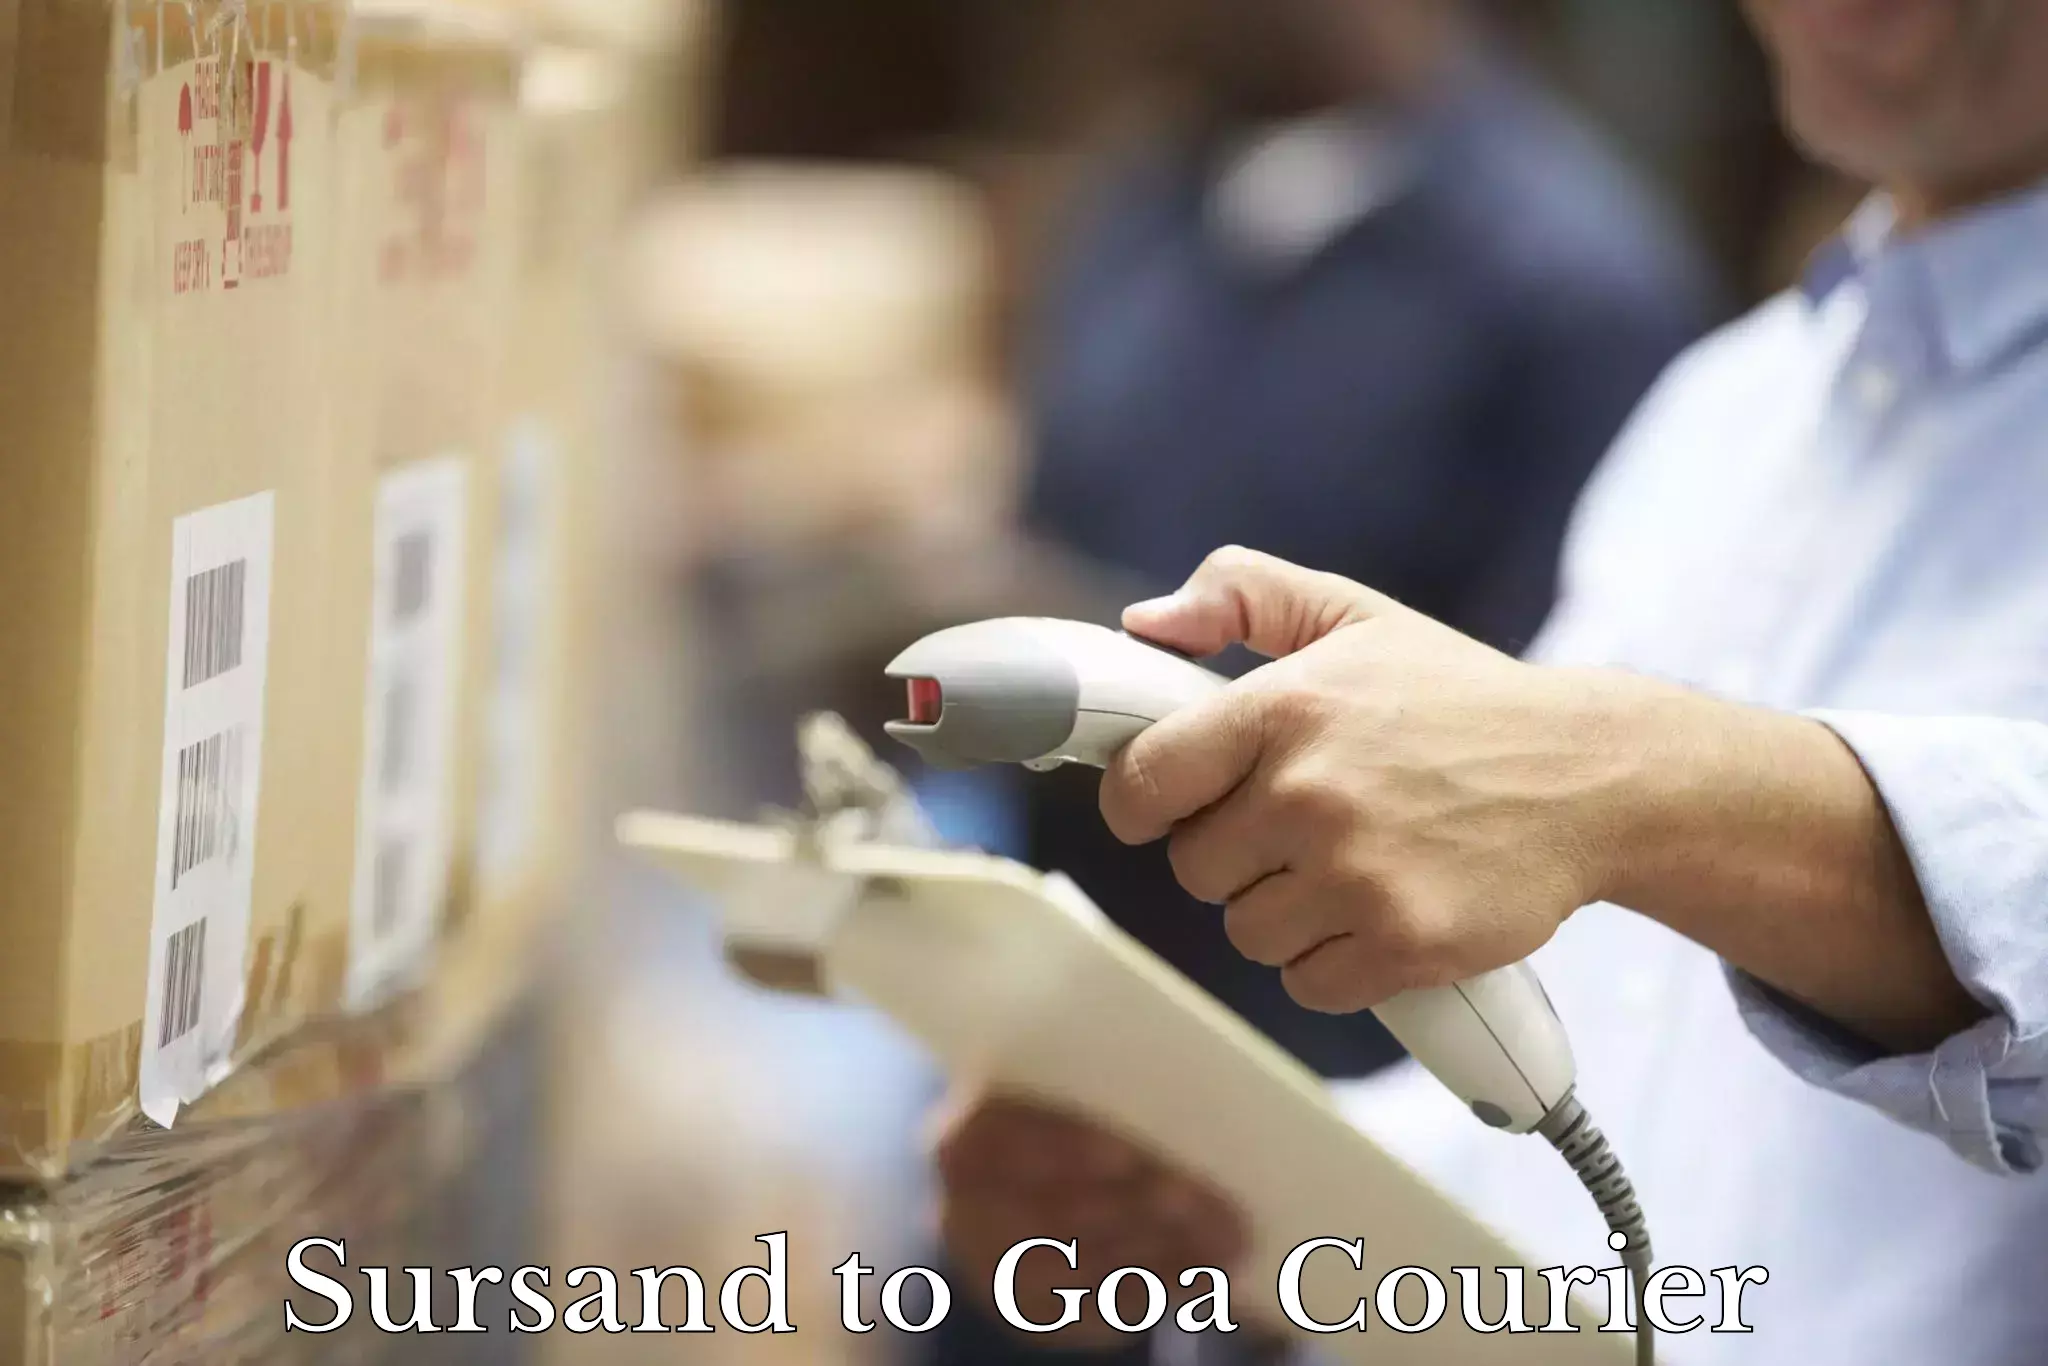 Global logistics network Sursand to South Goa